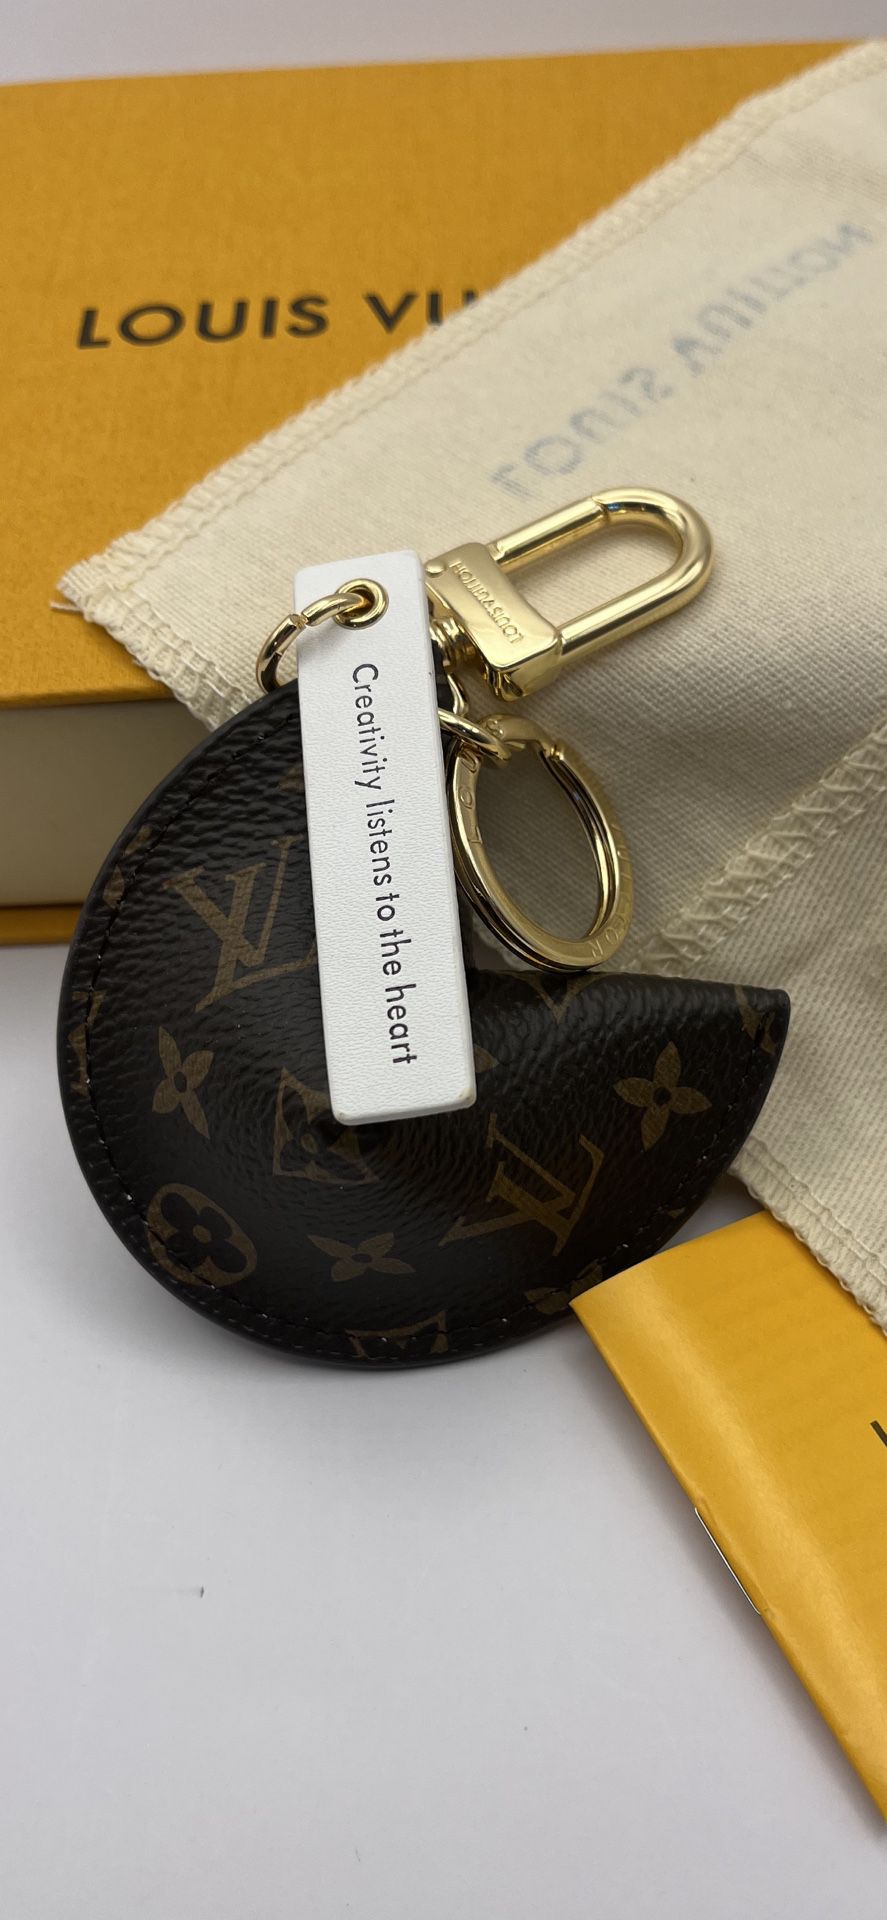 082623 SNEAK PEEK Preloved Louis Vuitton Fleur de Monogram Bag Charm (6)  $40 OFF